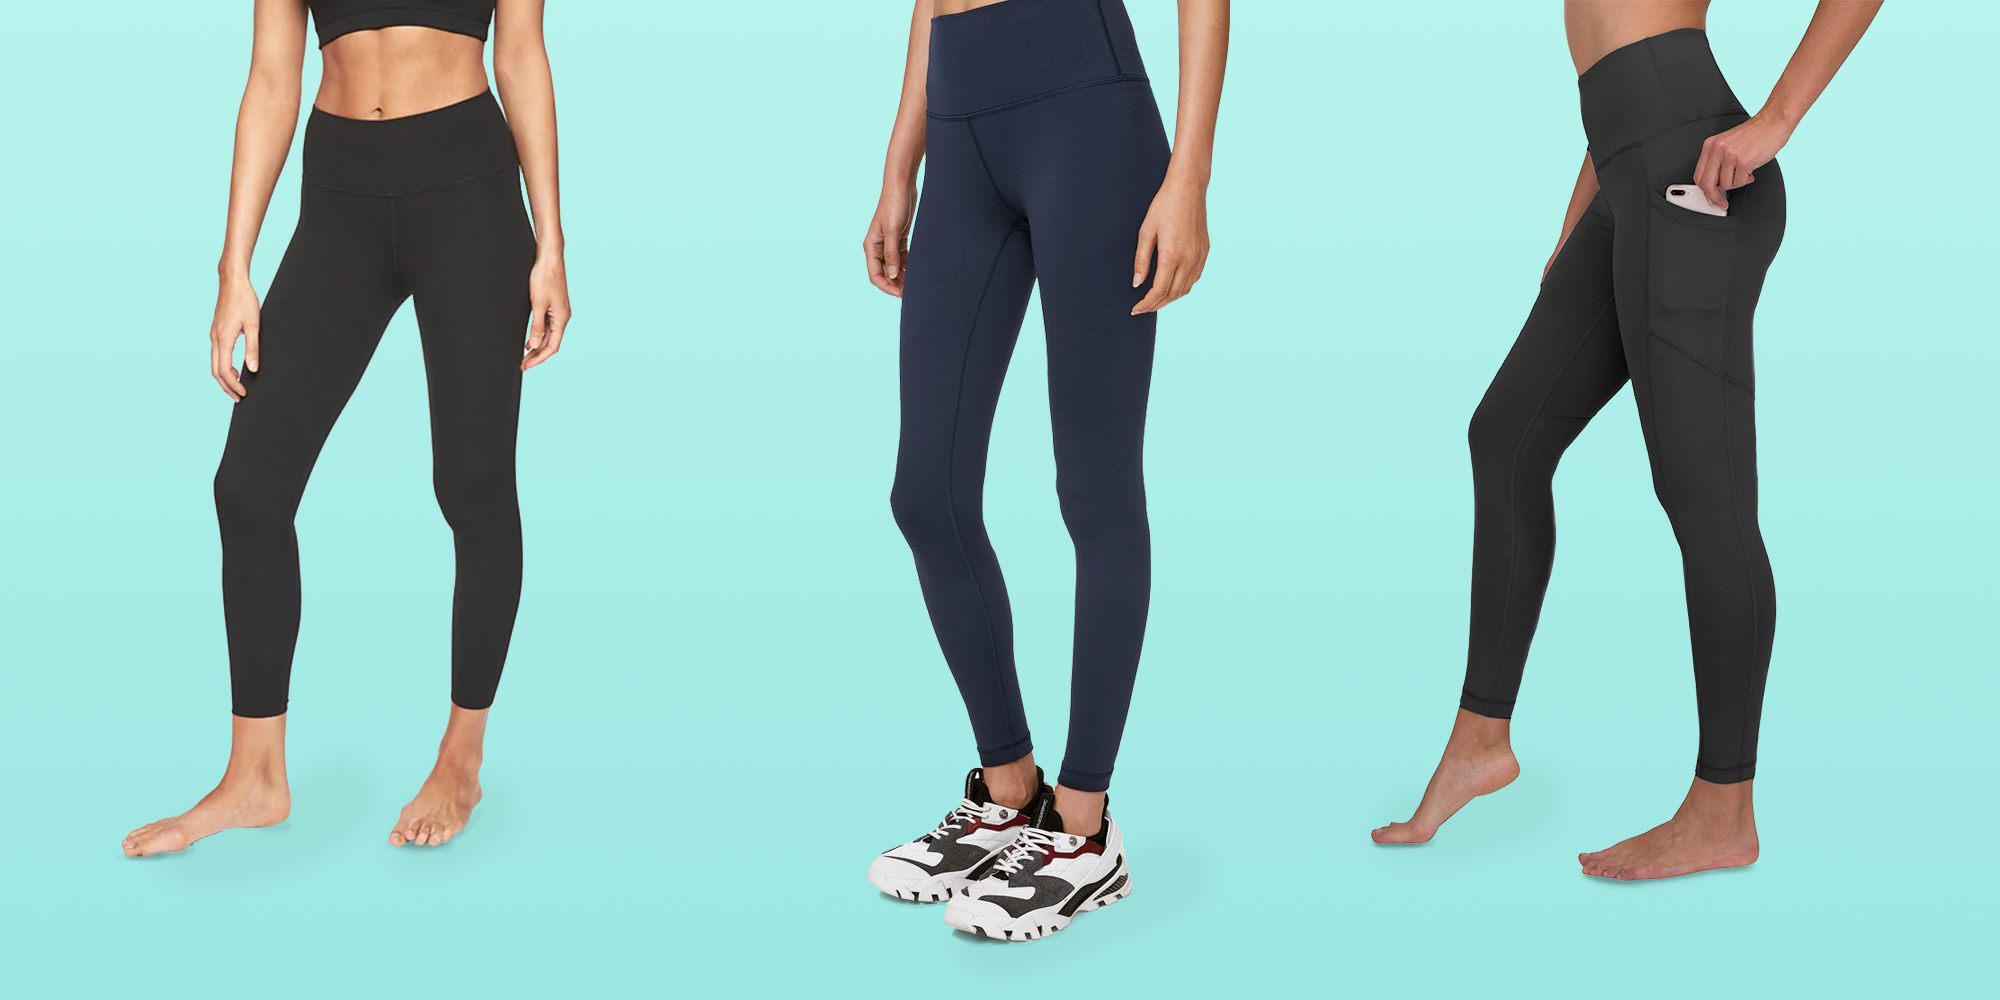 New Women/'s Yoga Gym Workout Knee Length Capri Cropped Two-Tone Leggings Pants